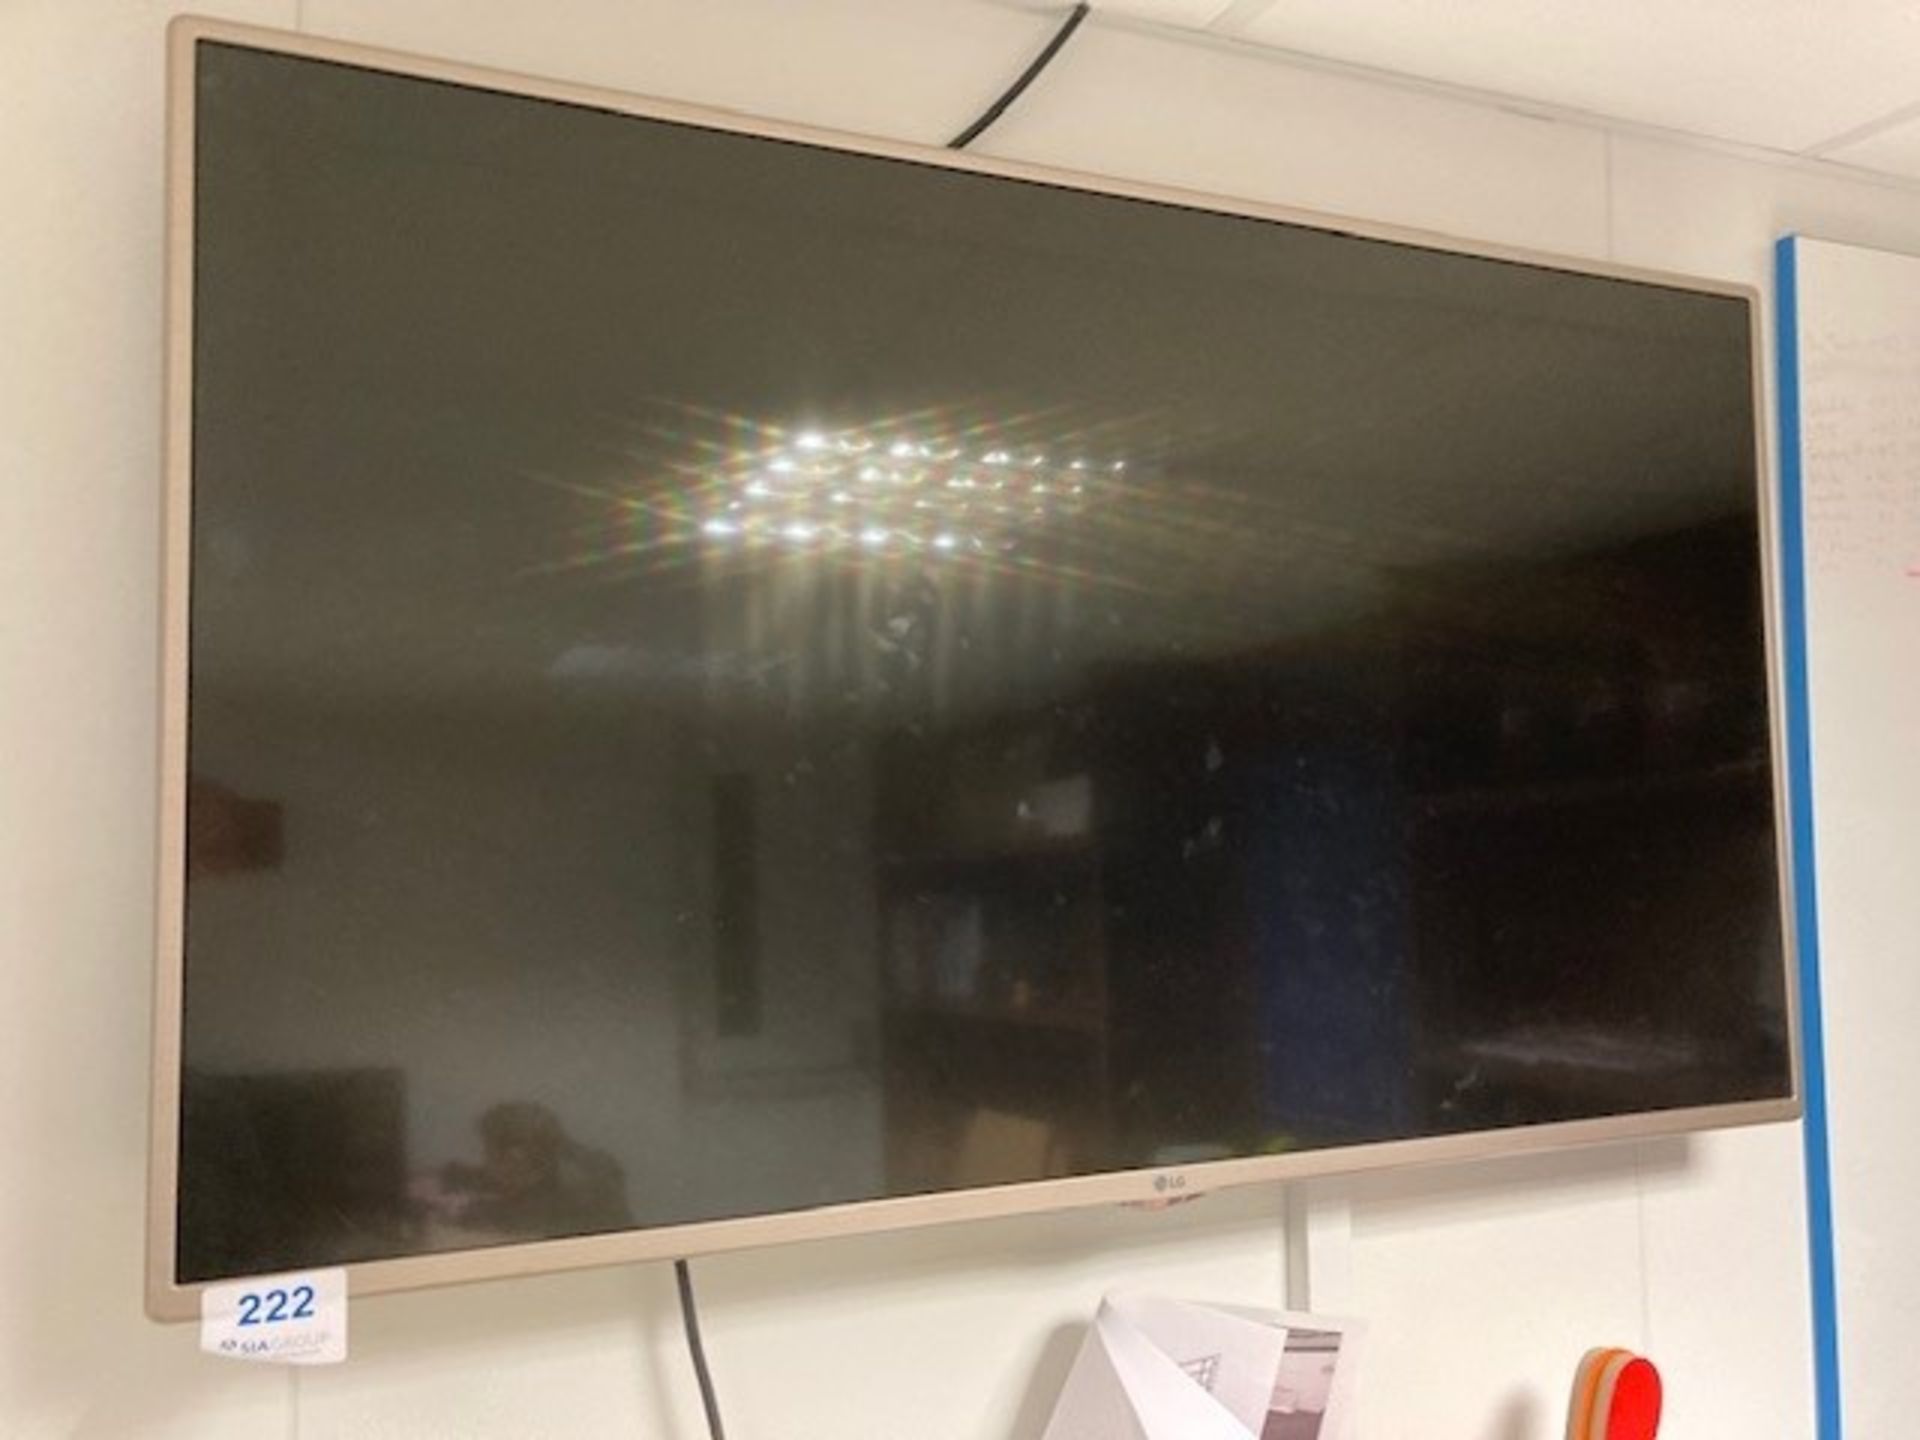 LG 50LF561V 50 Inch LED Television - Image 2 of 4